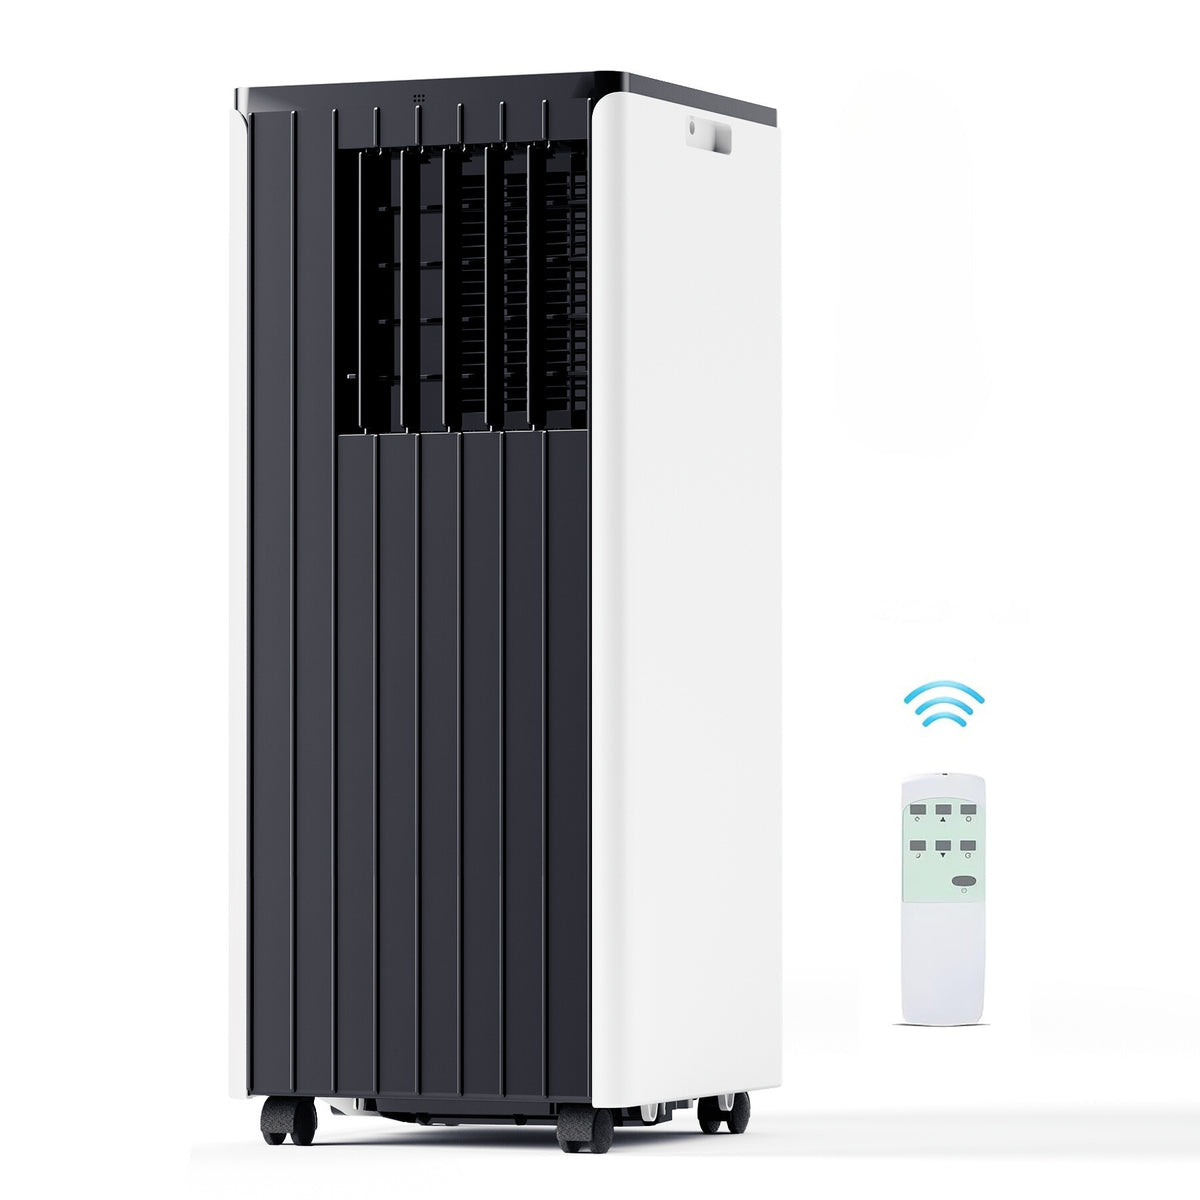 8,000 BTU Portable Air Conditioner, Black and White